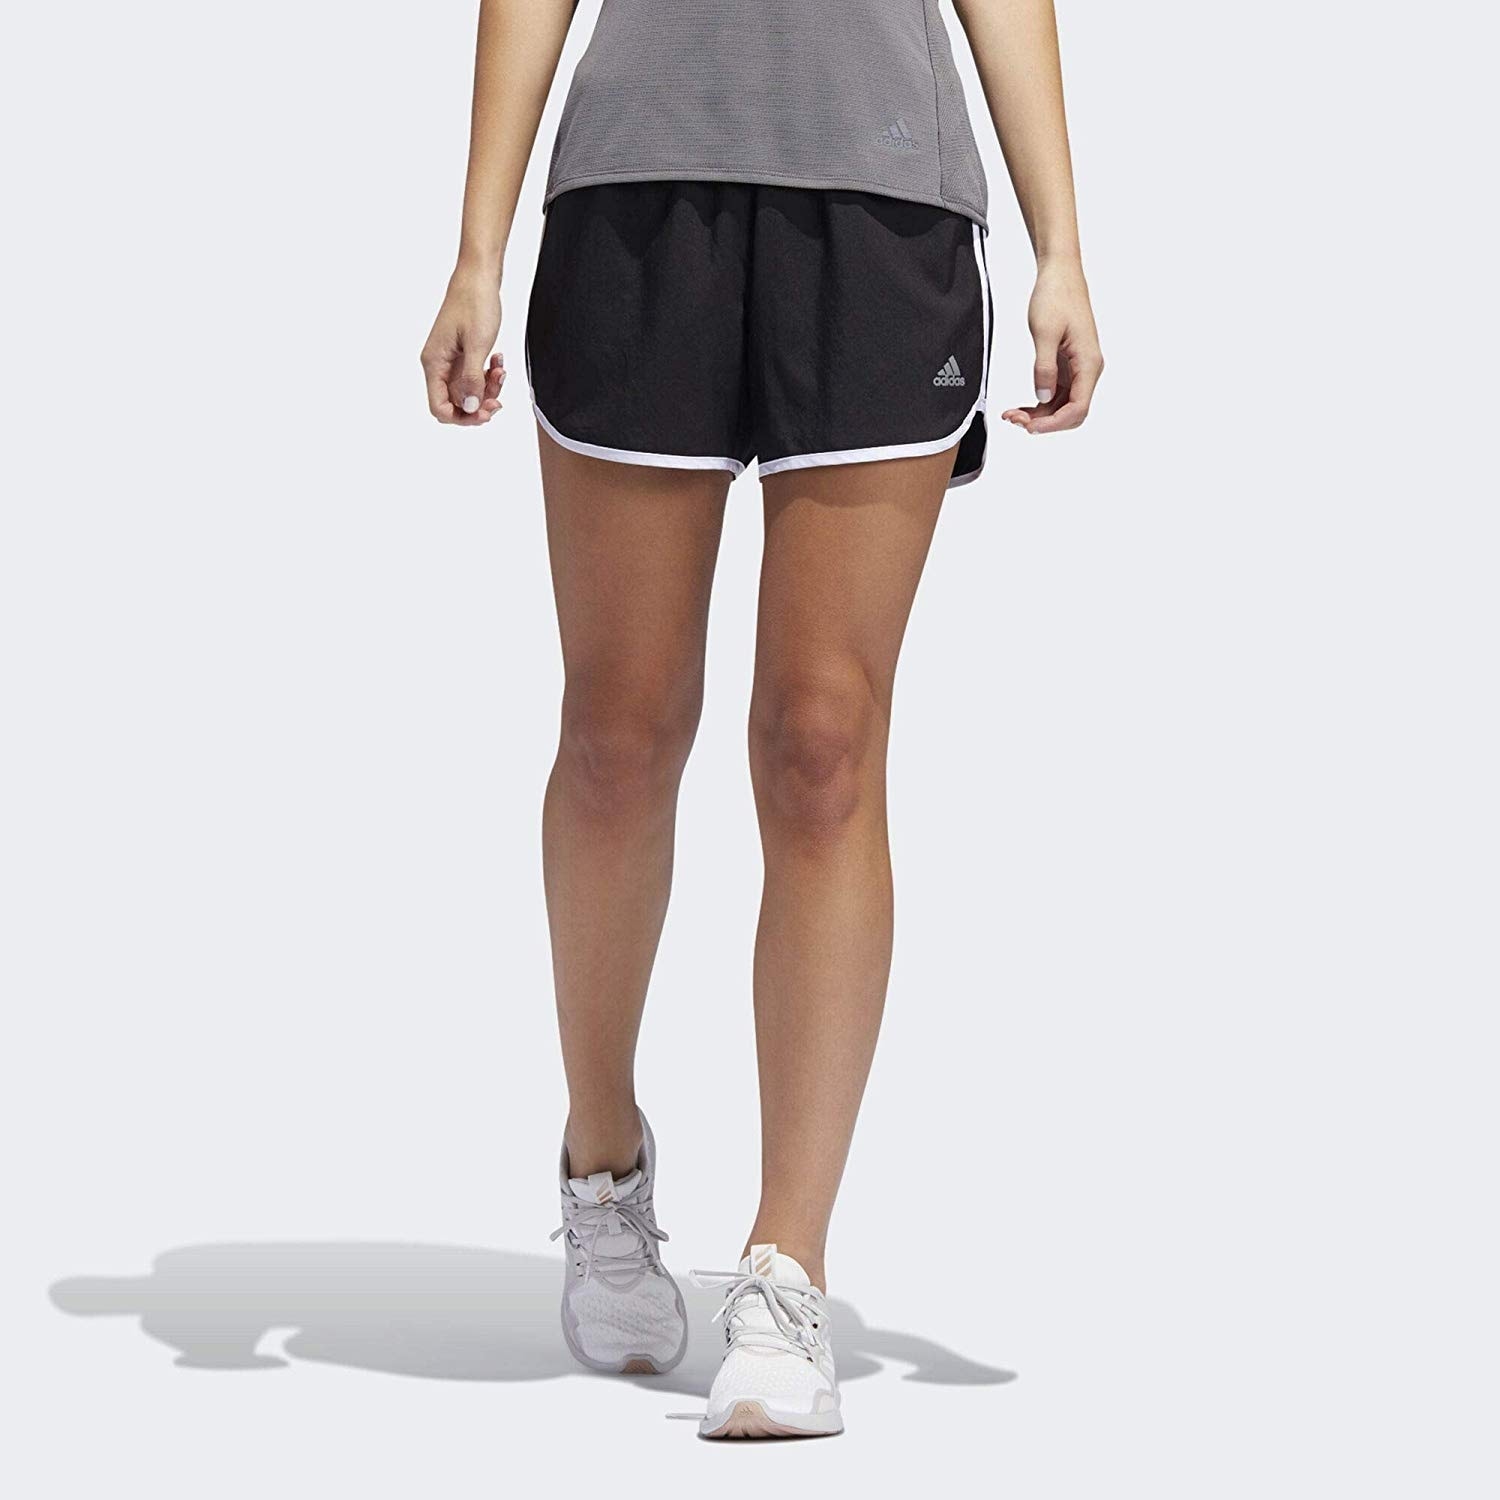 adidas m20 4 shorts